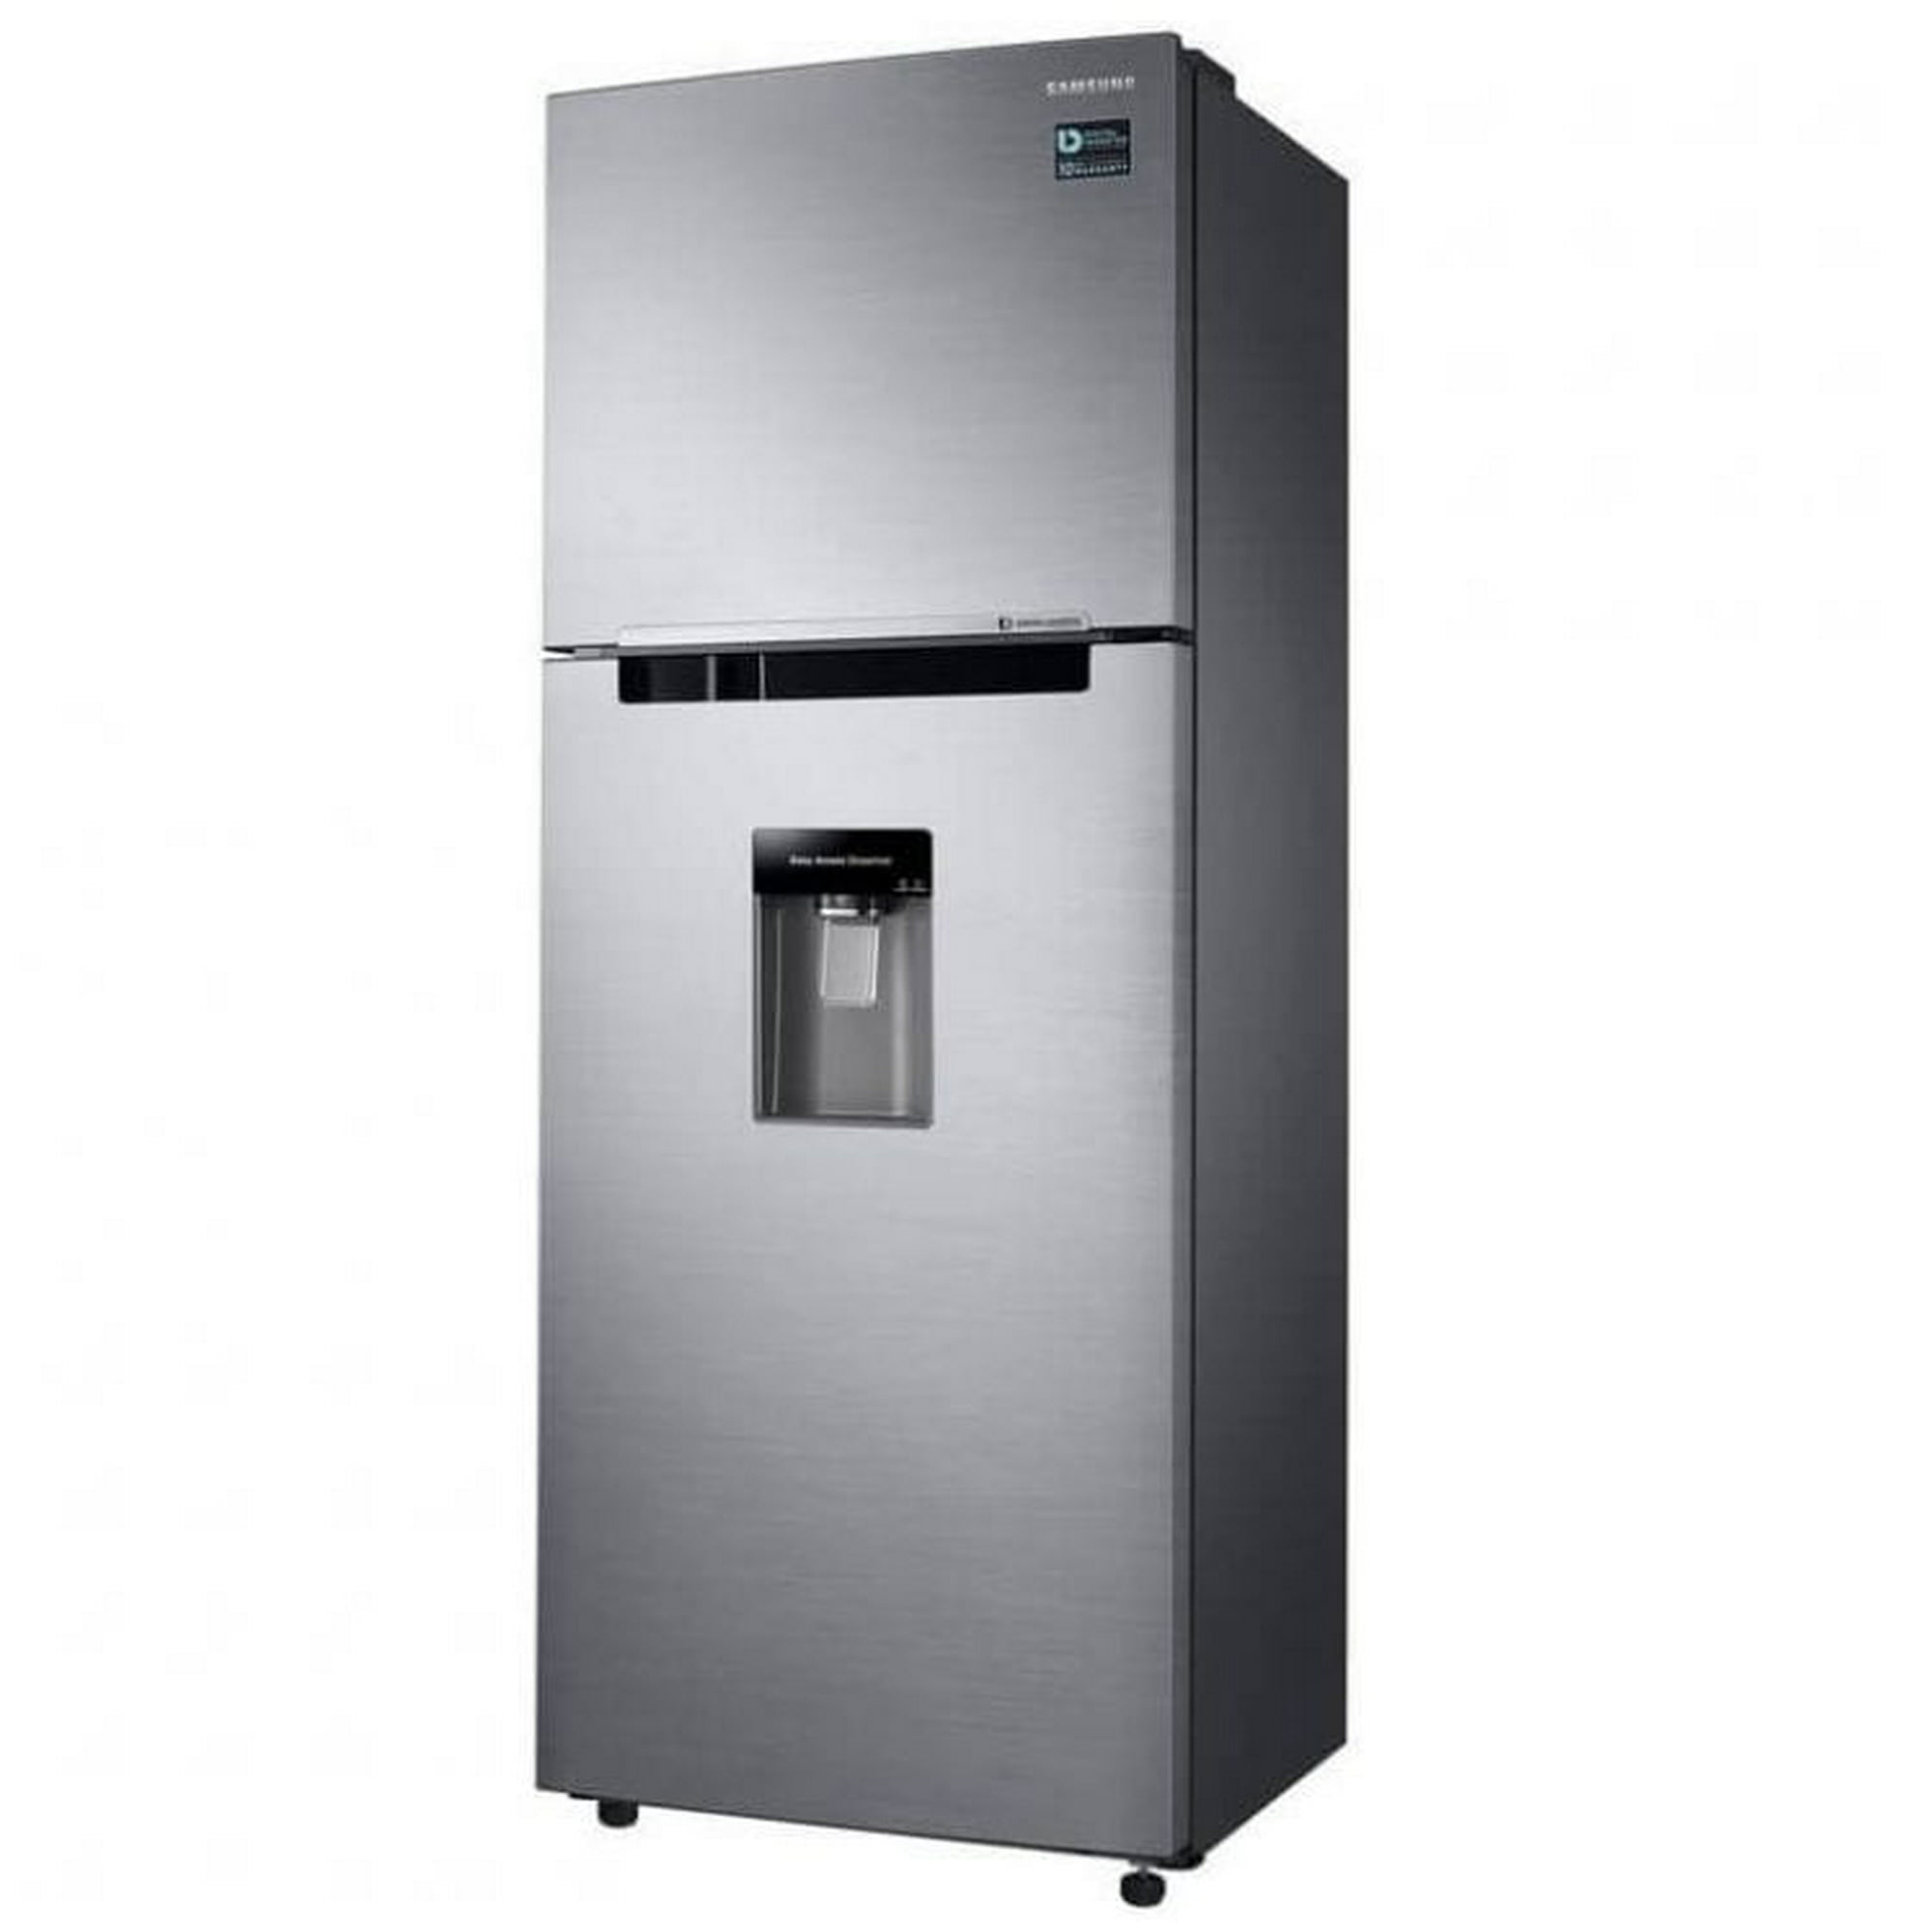 Refrigerador Samsung Top Mount 12 Pies Acero Inoxidable RT32A5710S8/EM